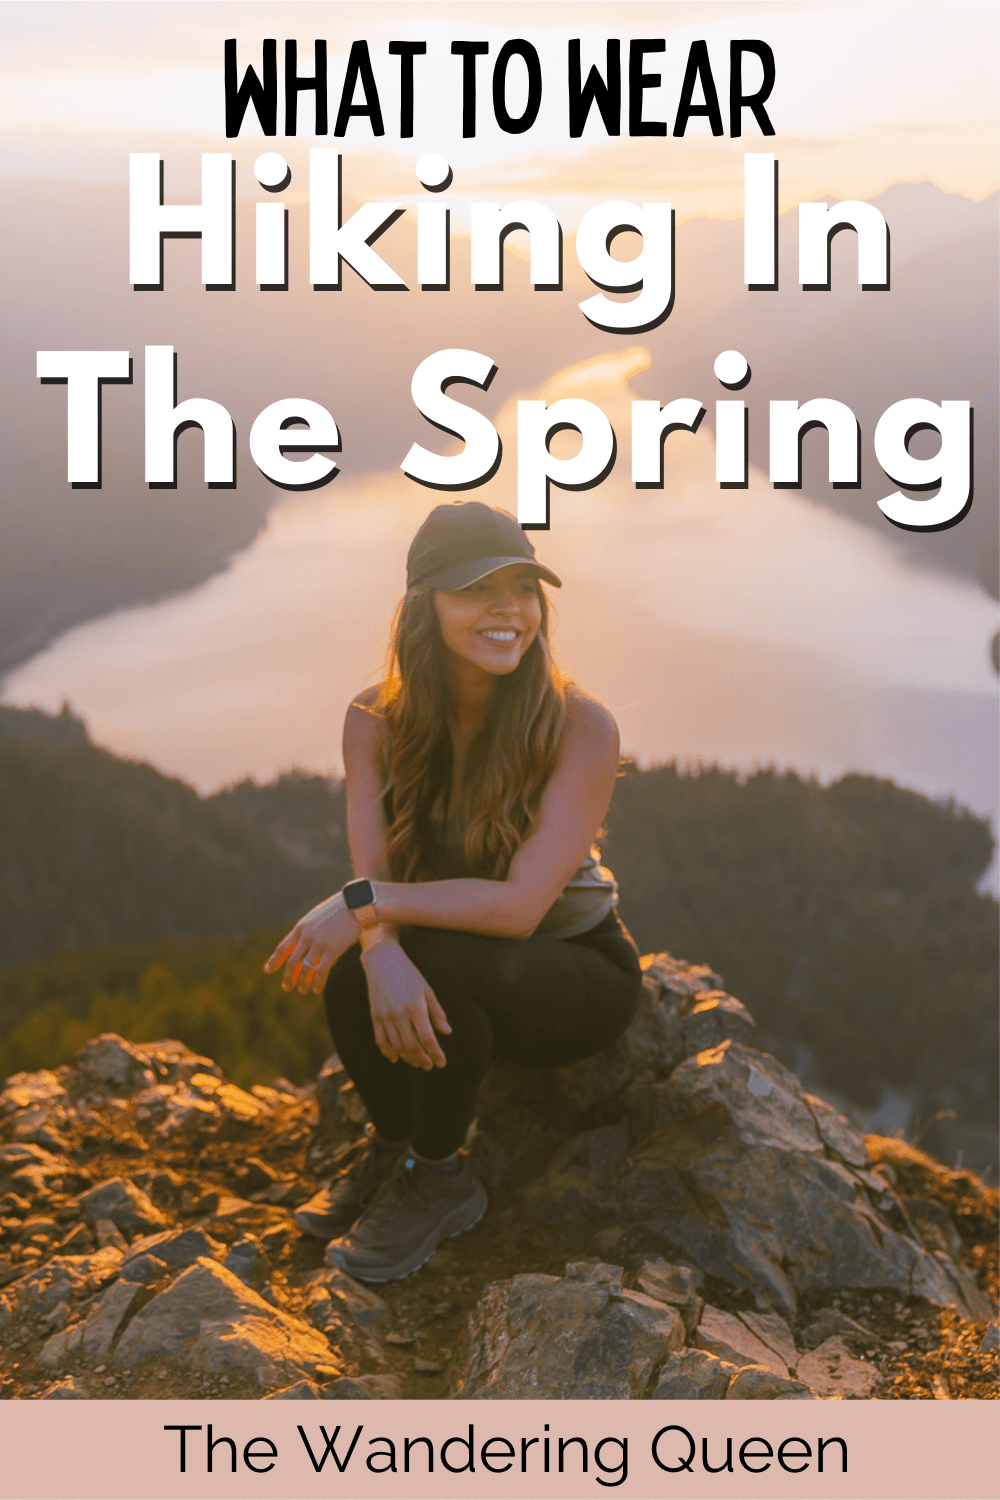 What To Wear Hiking as a Woman  Hiking women, Hiking outfit women, Cute  hiking outfit